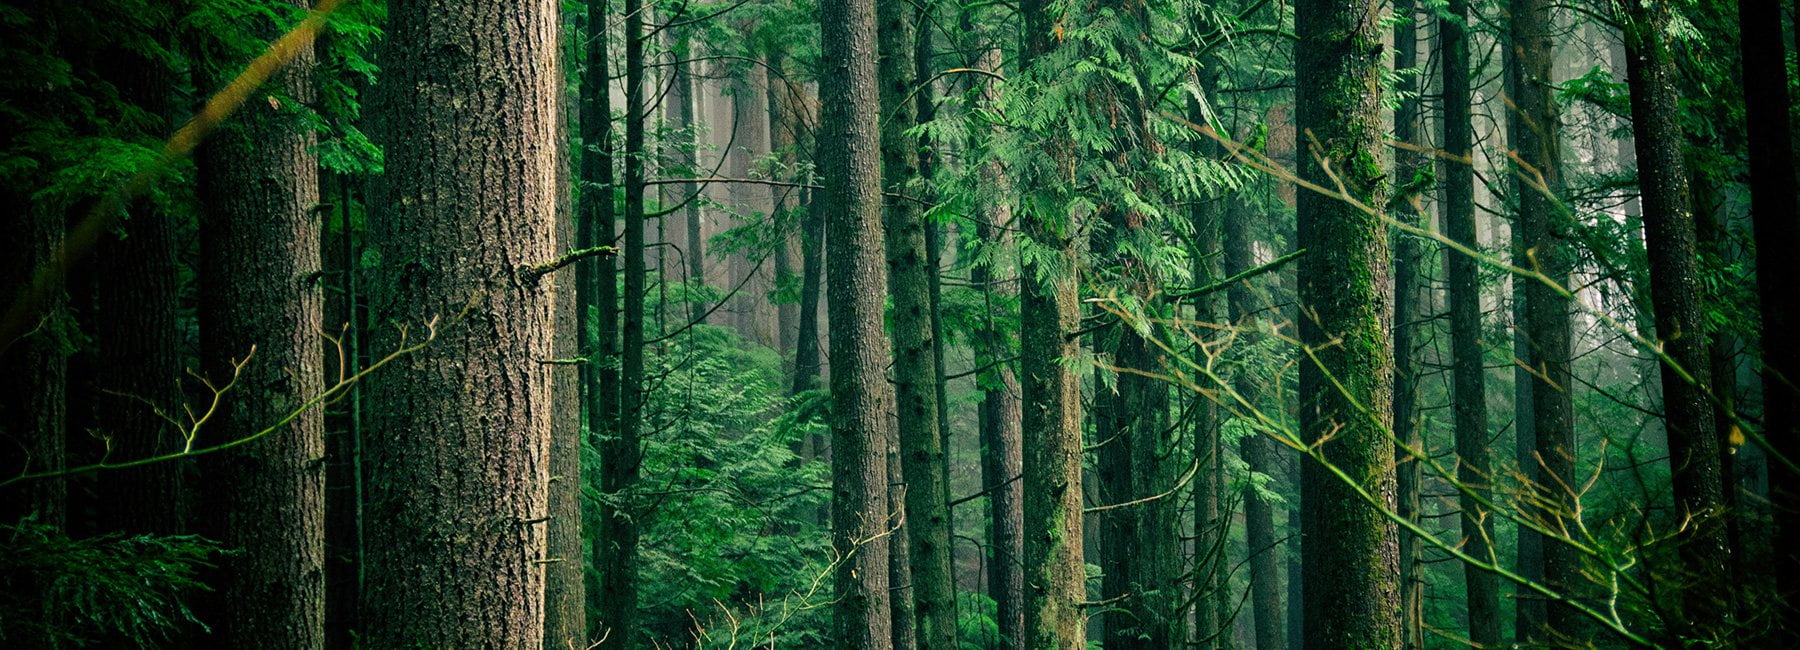 can planting a trillion trees save us from climate change designboom 1800 العلماء يخططون لزراعة تريليون شجرة .. ولكن لماذا؟ مجلة نقطة العلمية